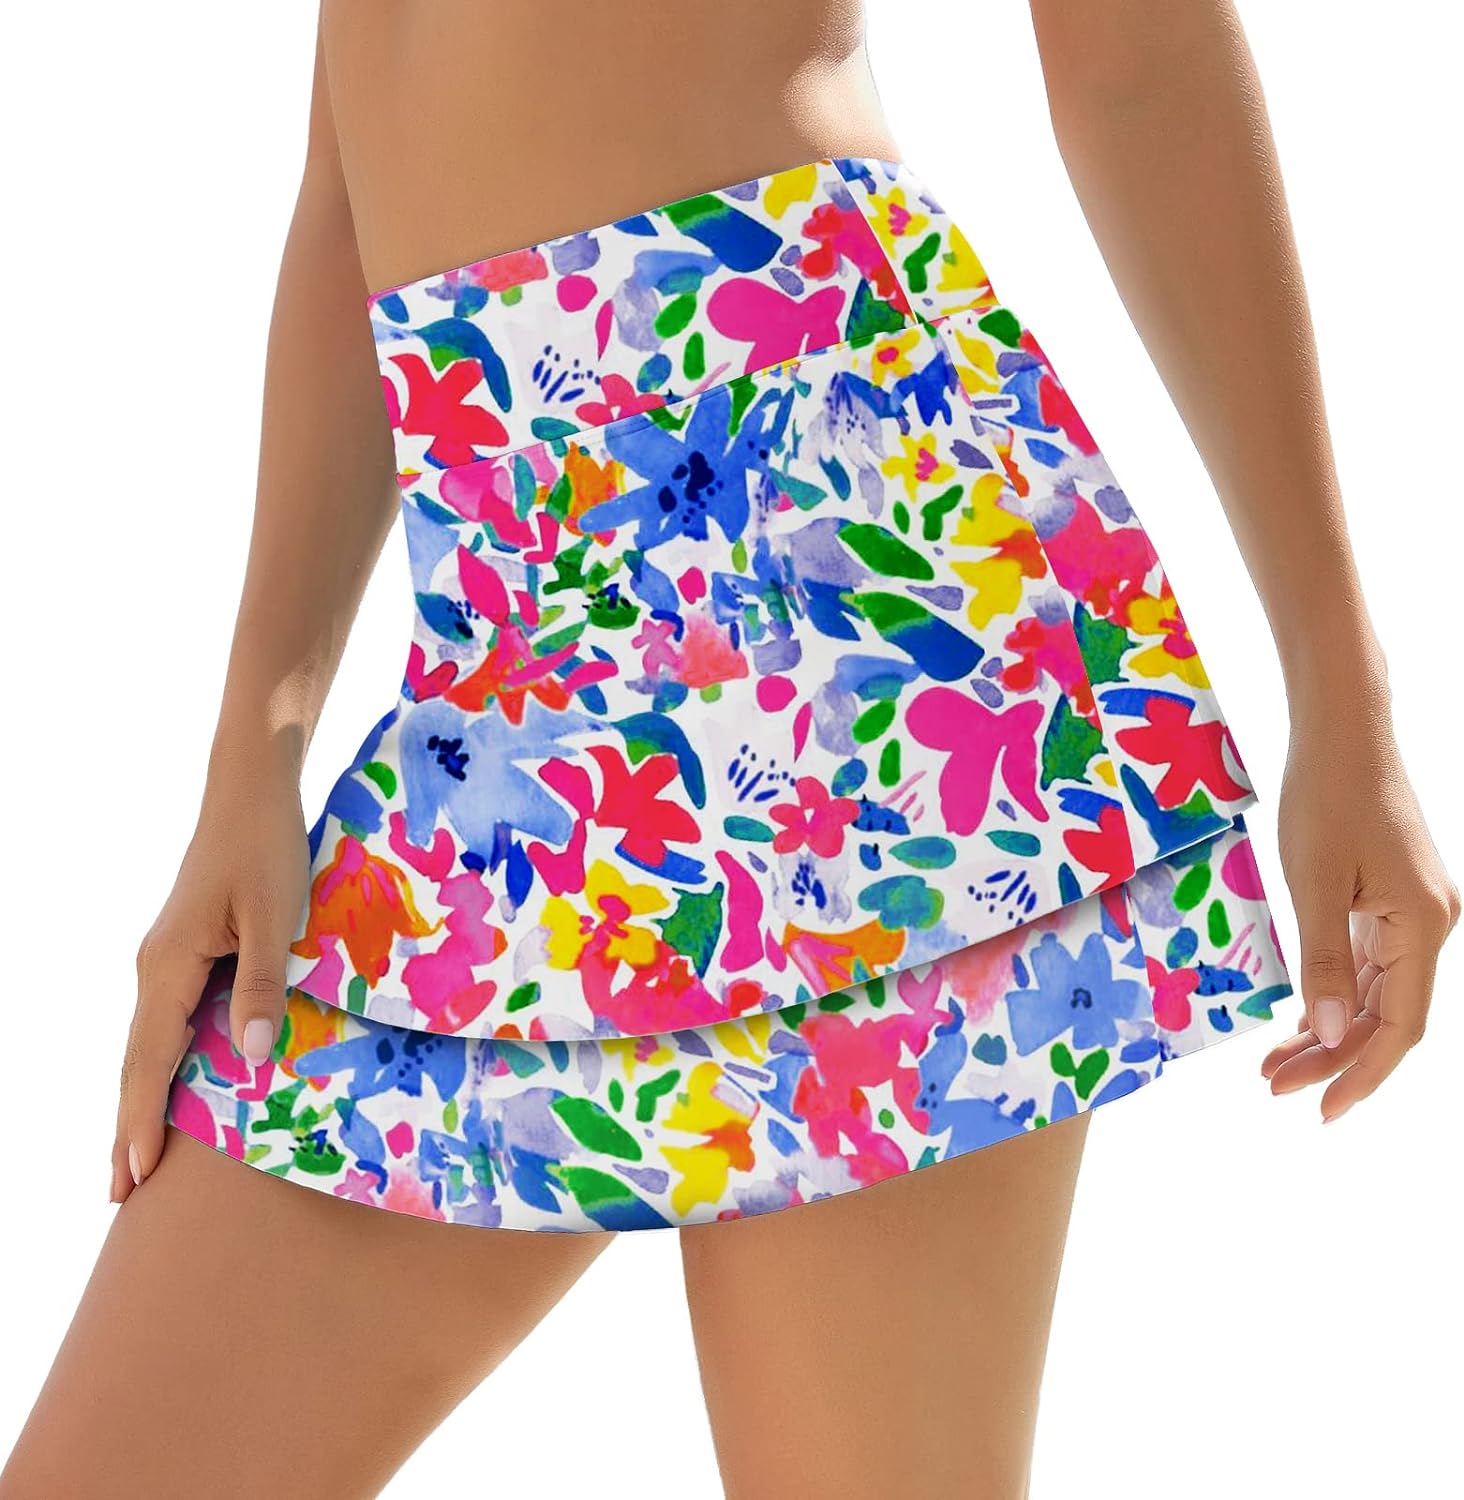 WOWENY Women's Swim Skirts Swimsuit High Waist Swimming Skorts with Shorts Bikini Bottoms with Pocket Bathing Suit Bottoms